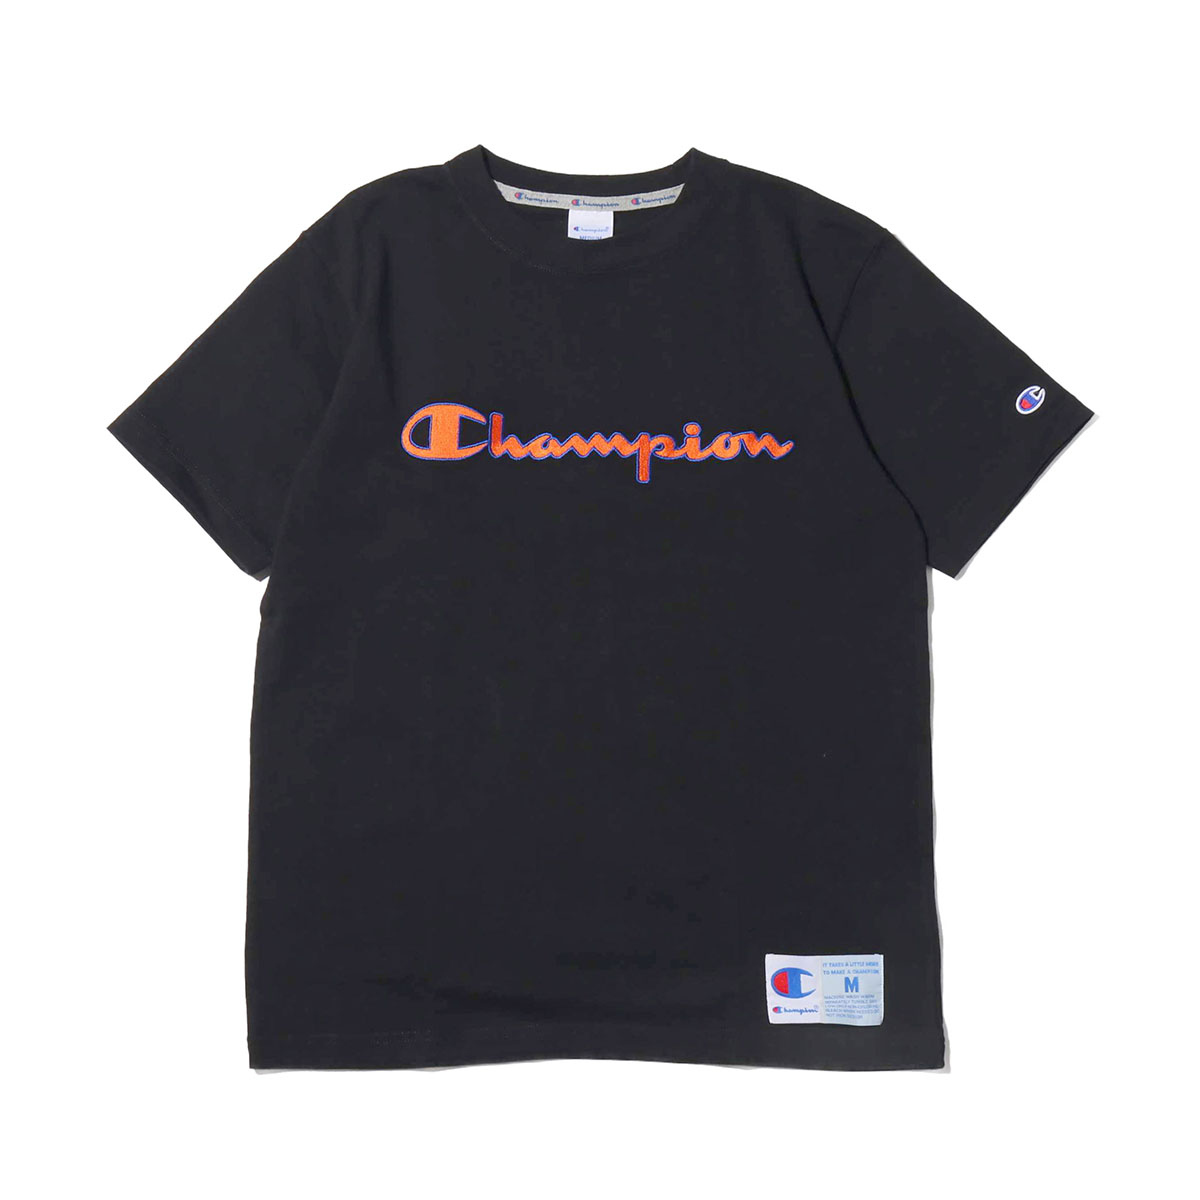 black and orange champion shirt off 55 